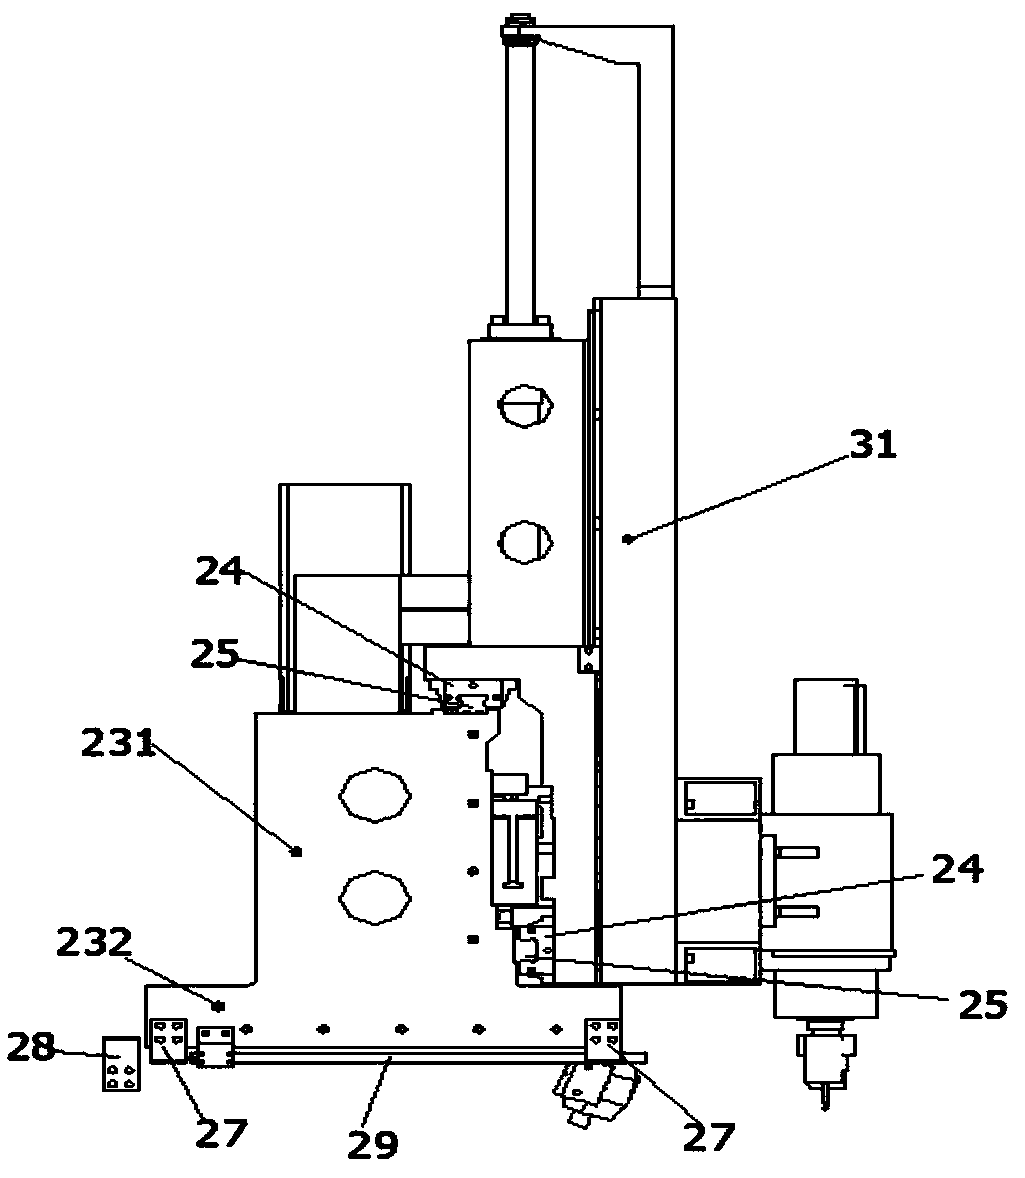 Rail structure of precision numerical control machine tool